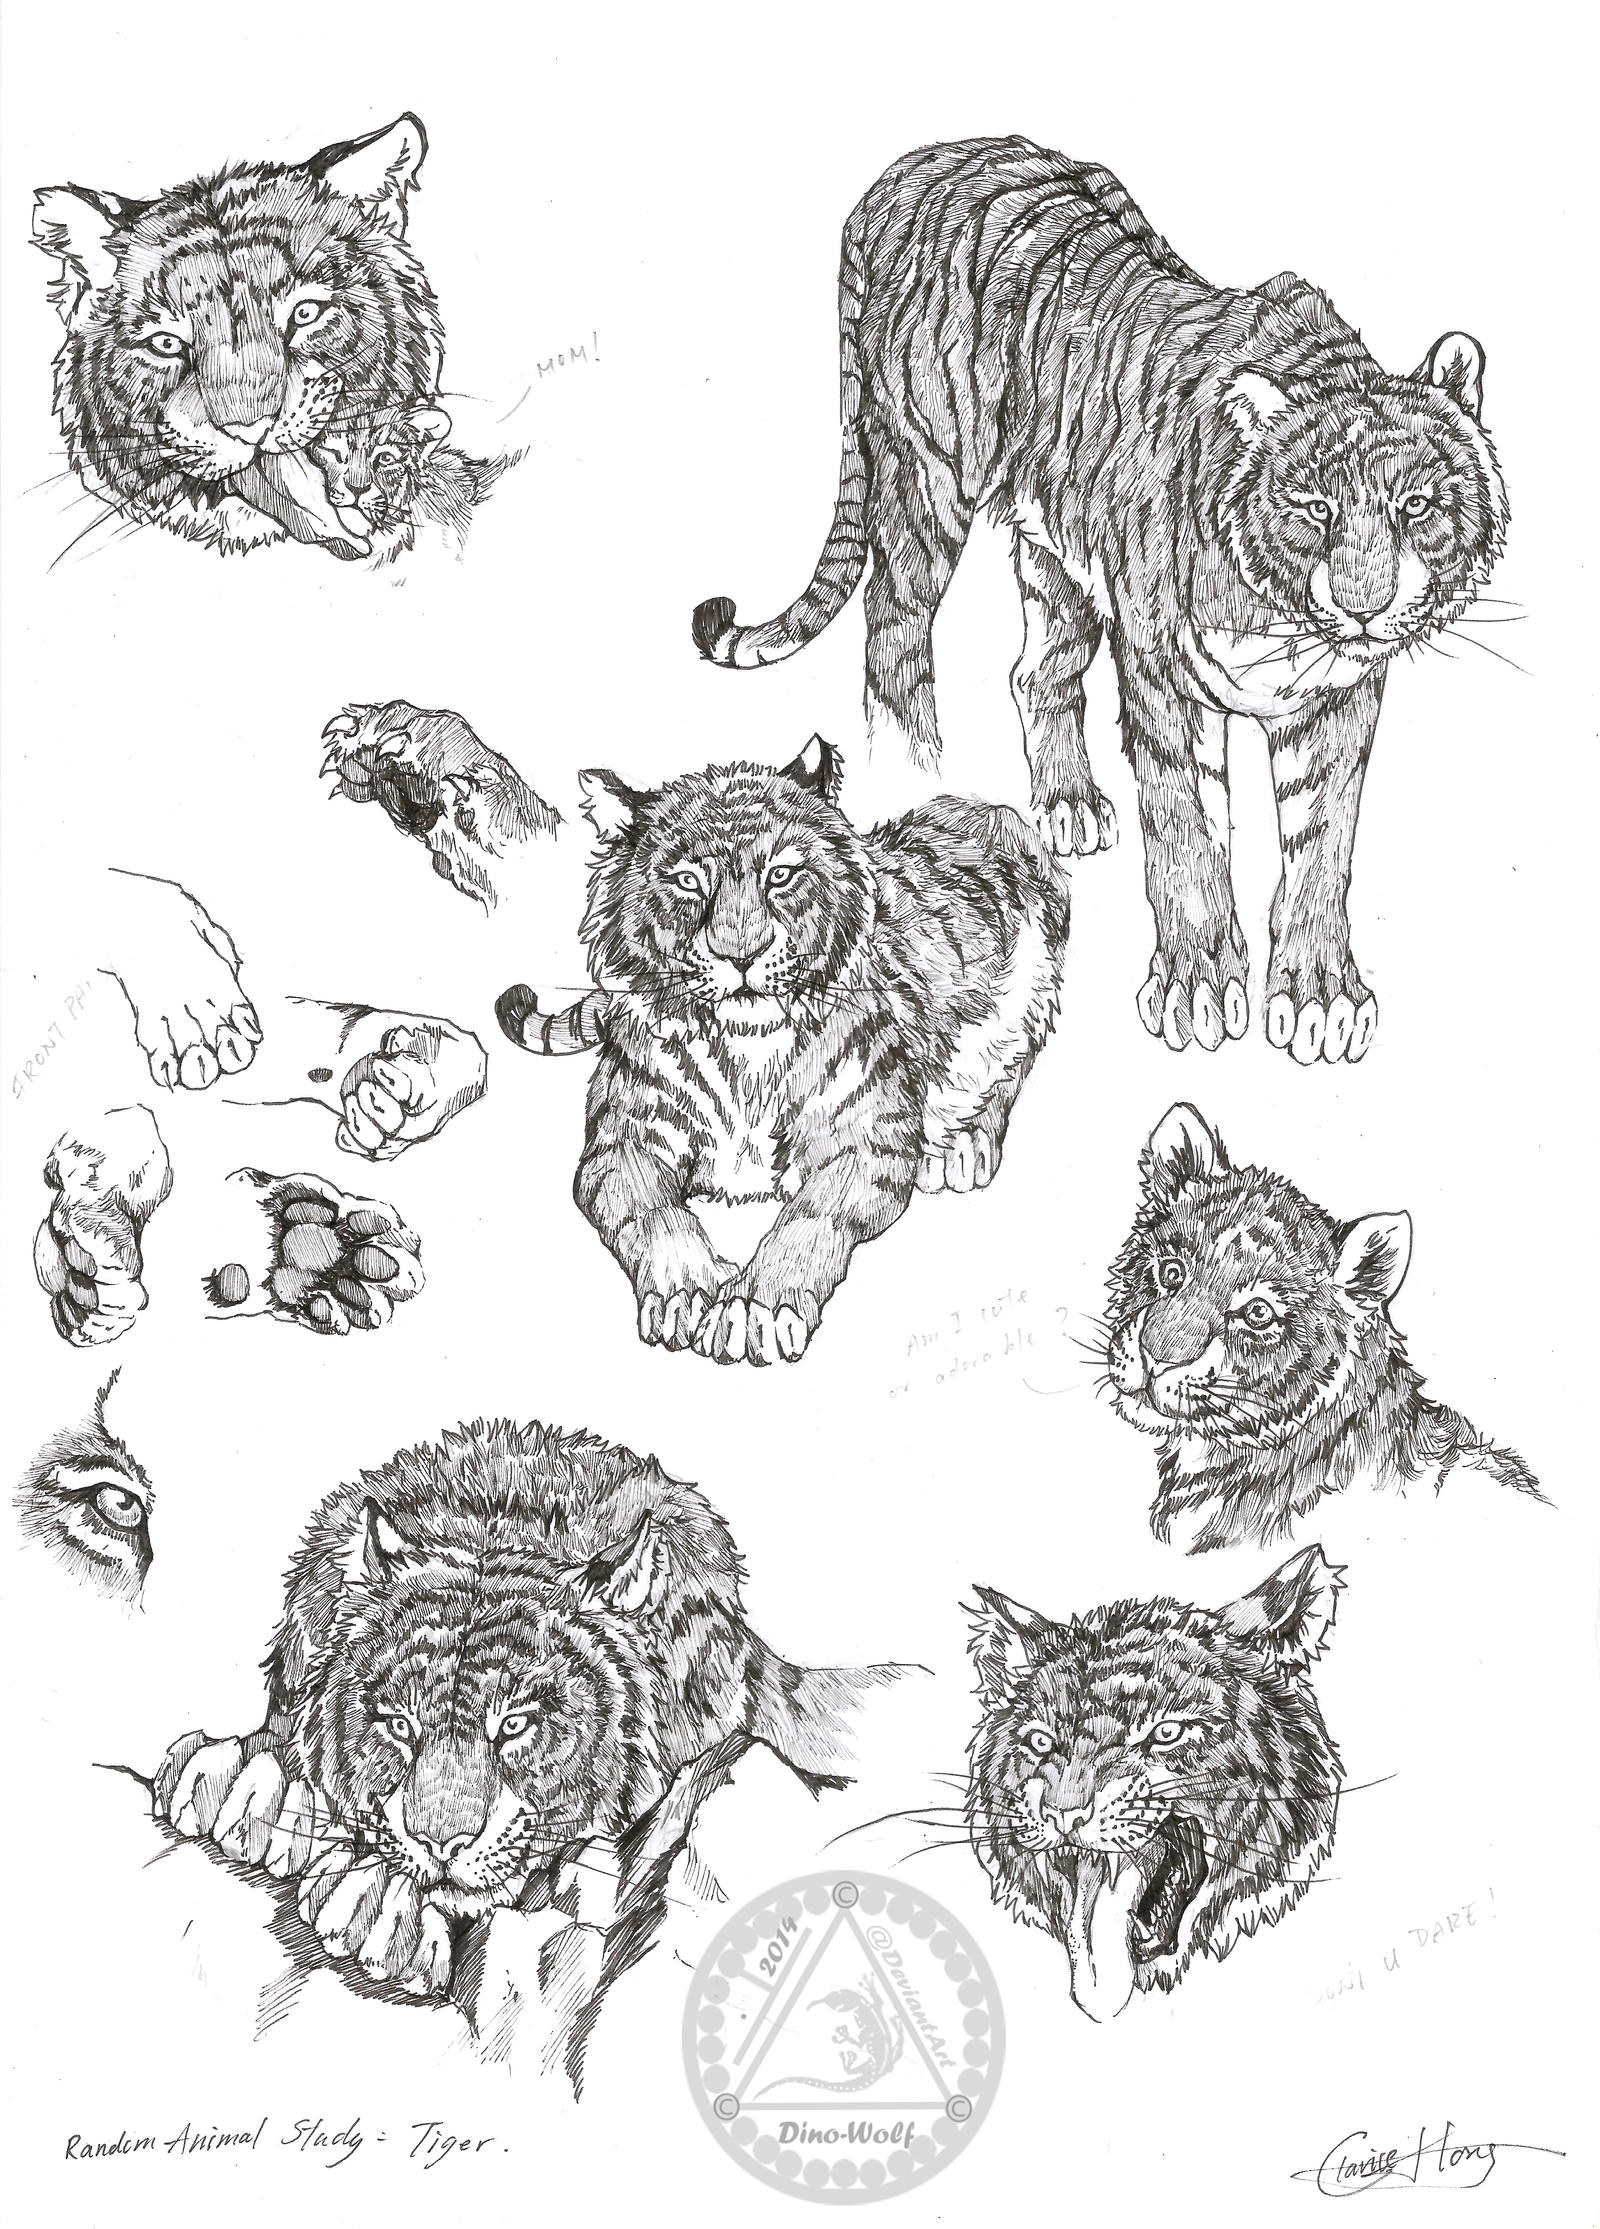 Random Animal Study - Tiger